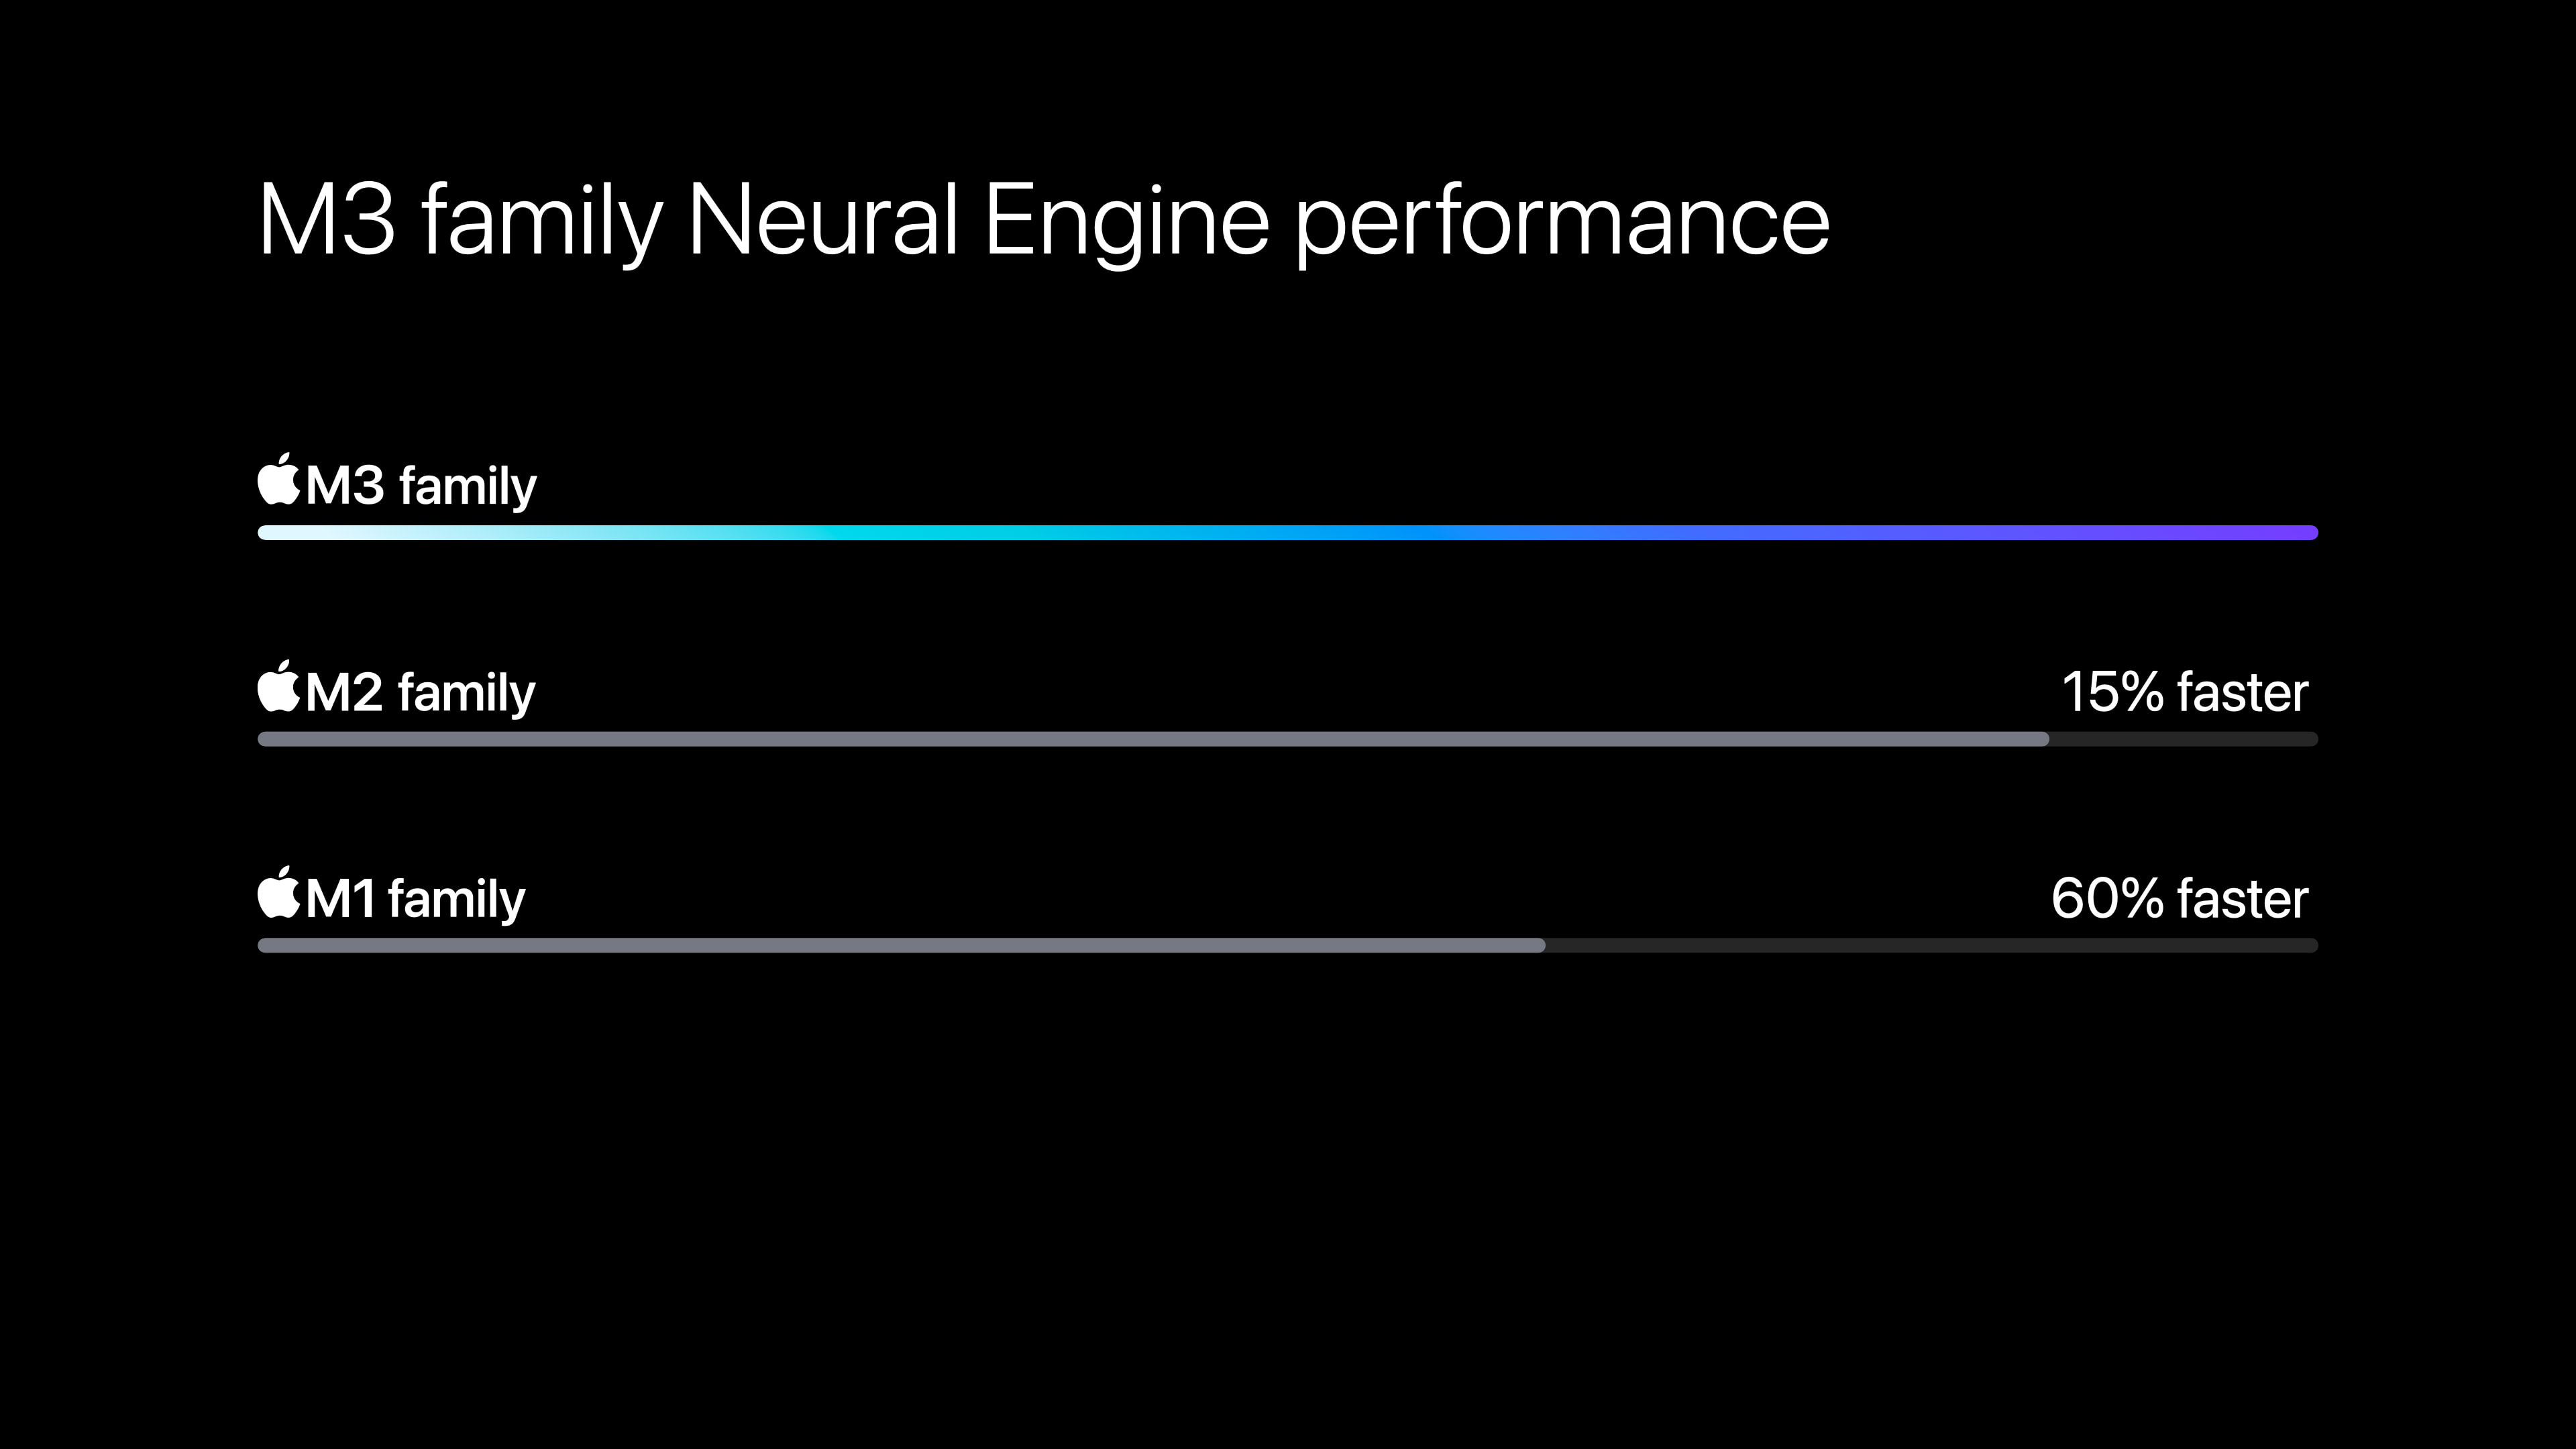 M3 family Neural Engine performance, Image: Apple